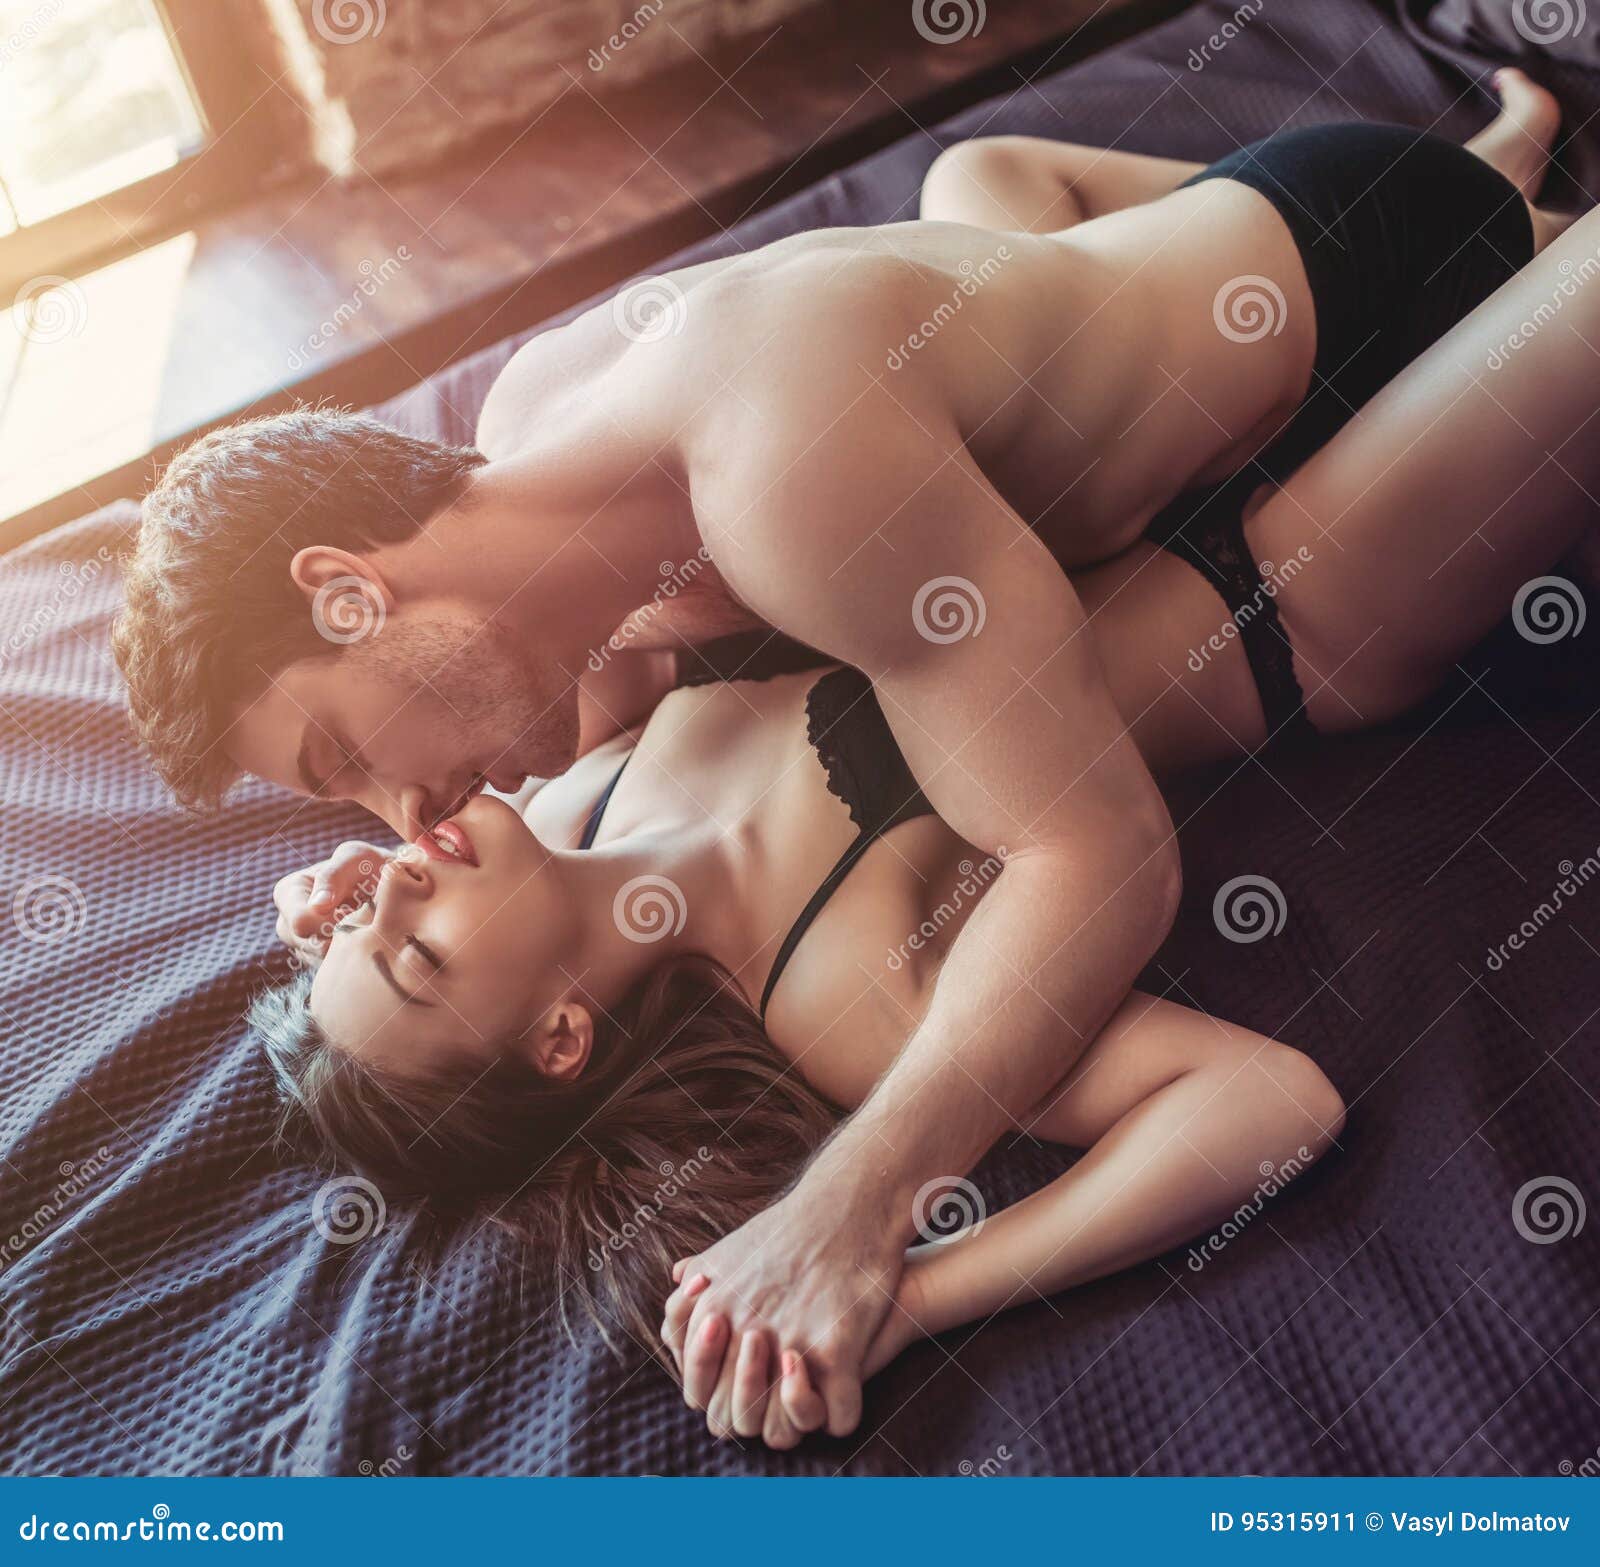 stock photo couple having sex bed